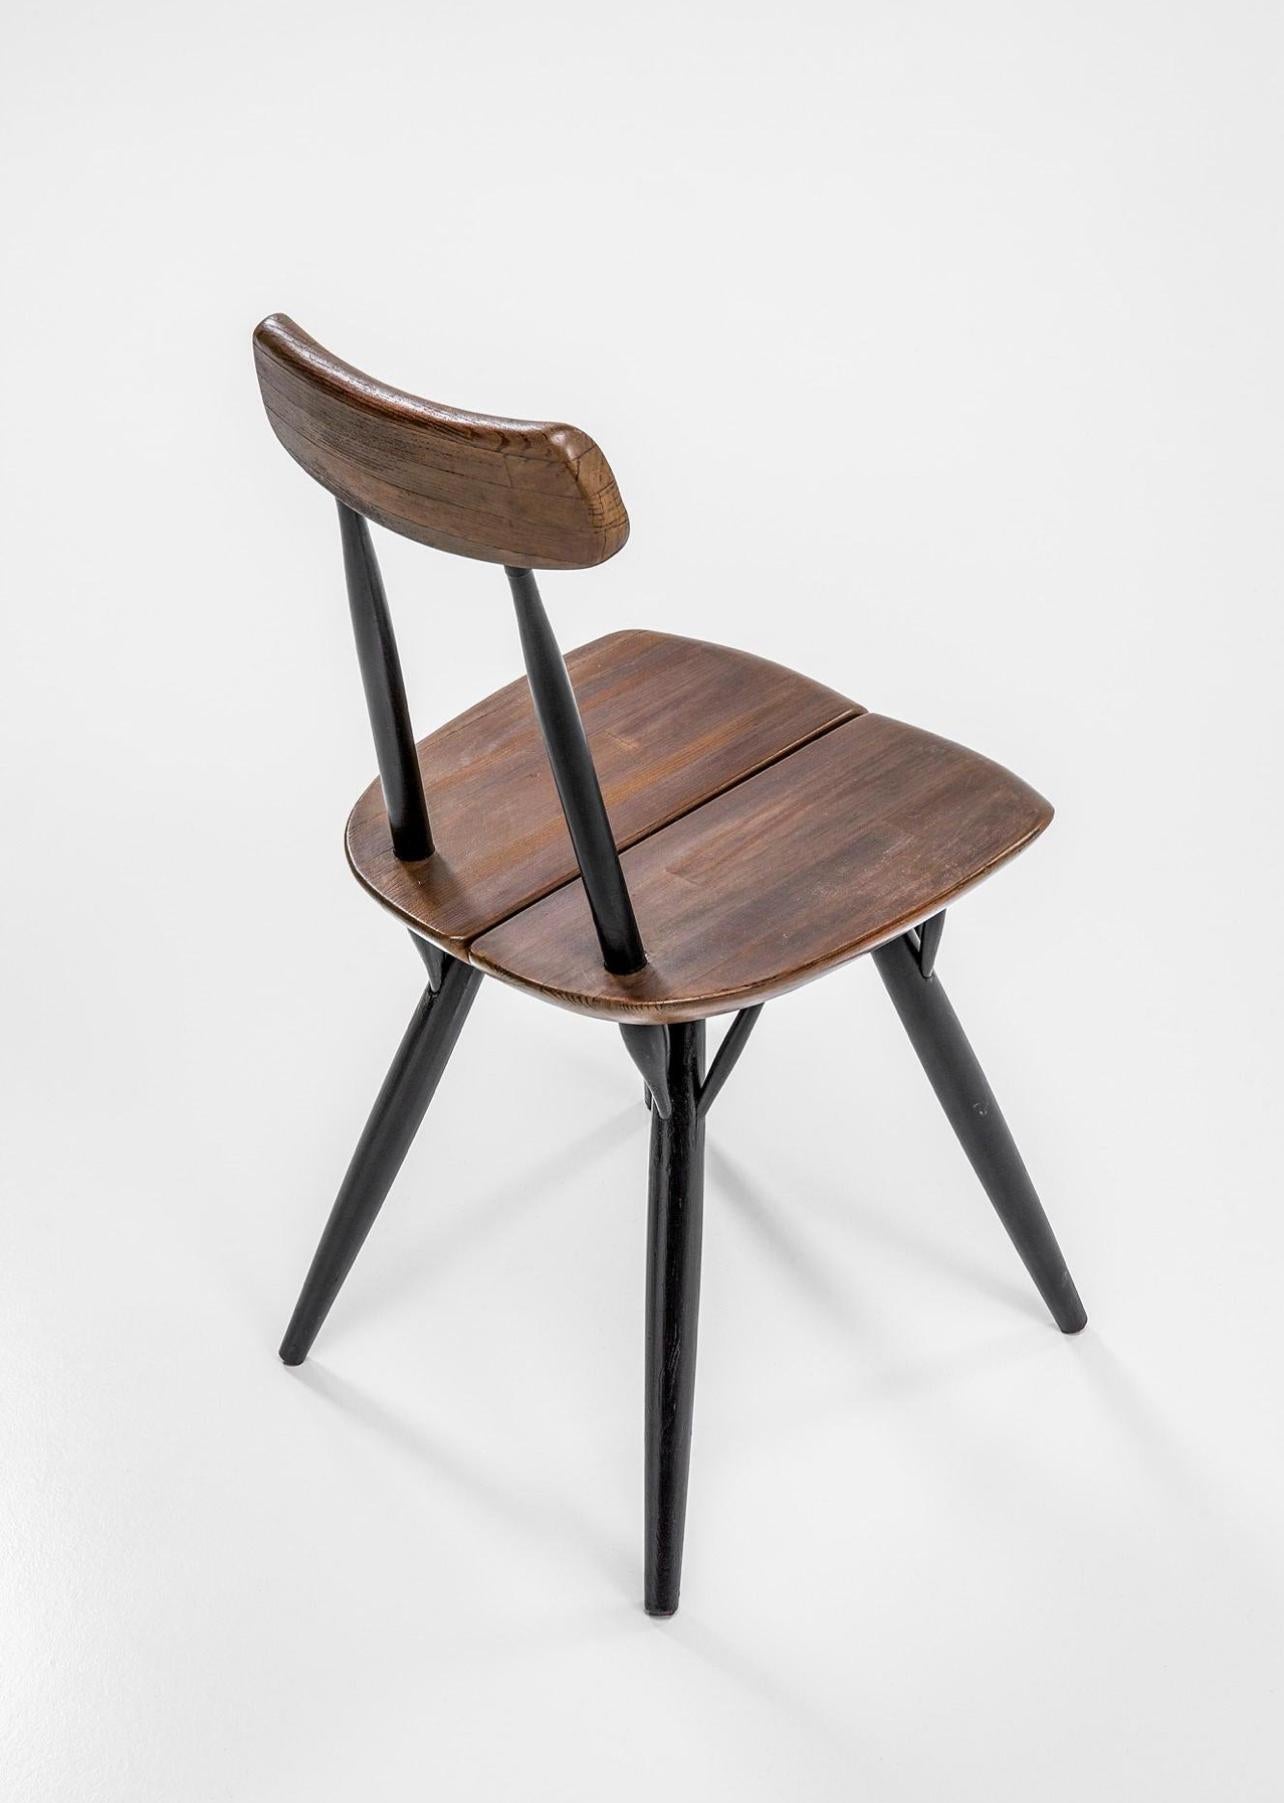 Wonderful chairs designed by Ilmari Tapiovaara 
Producer: Laukaan Puu, Finland,  1957

